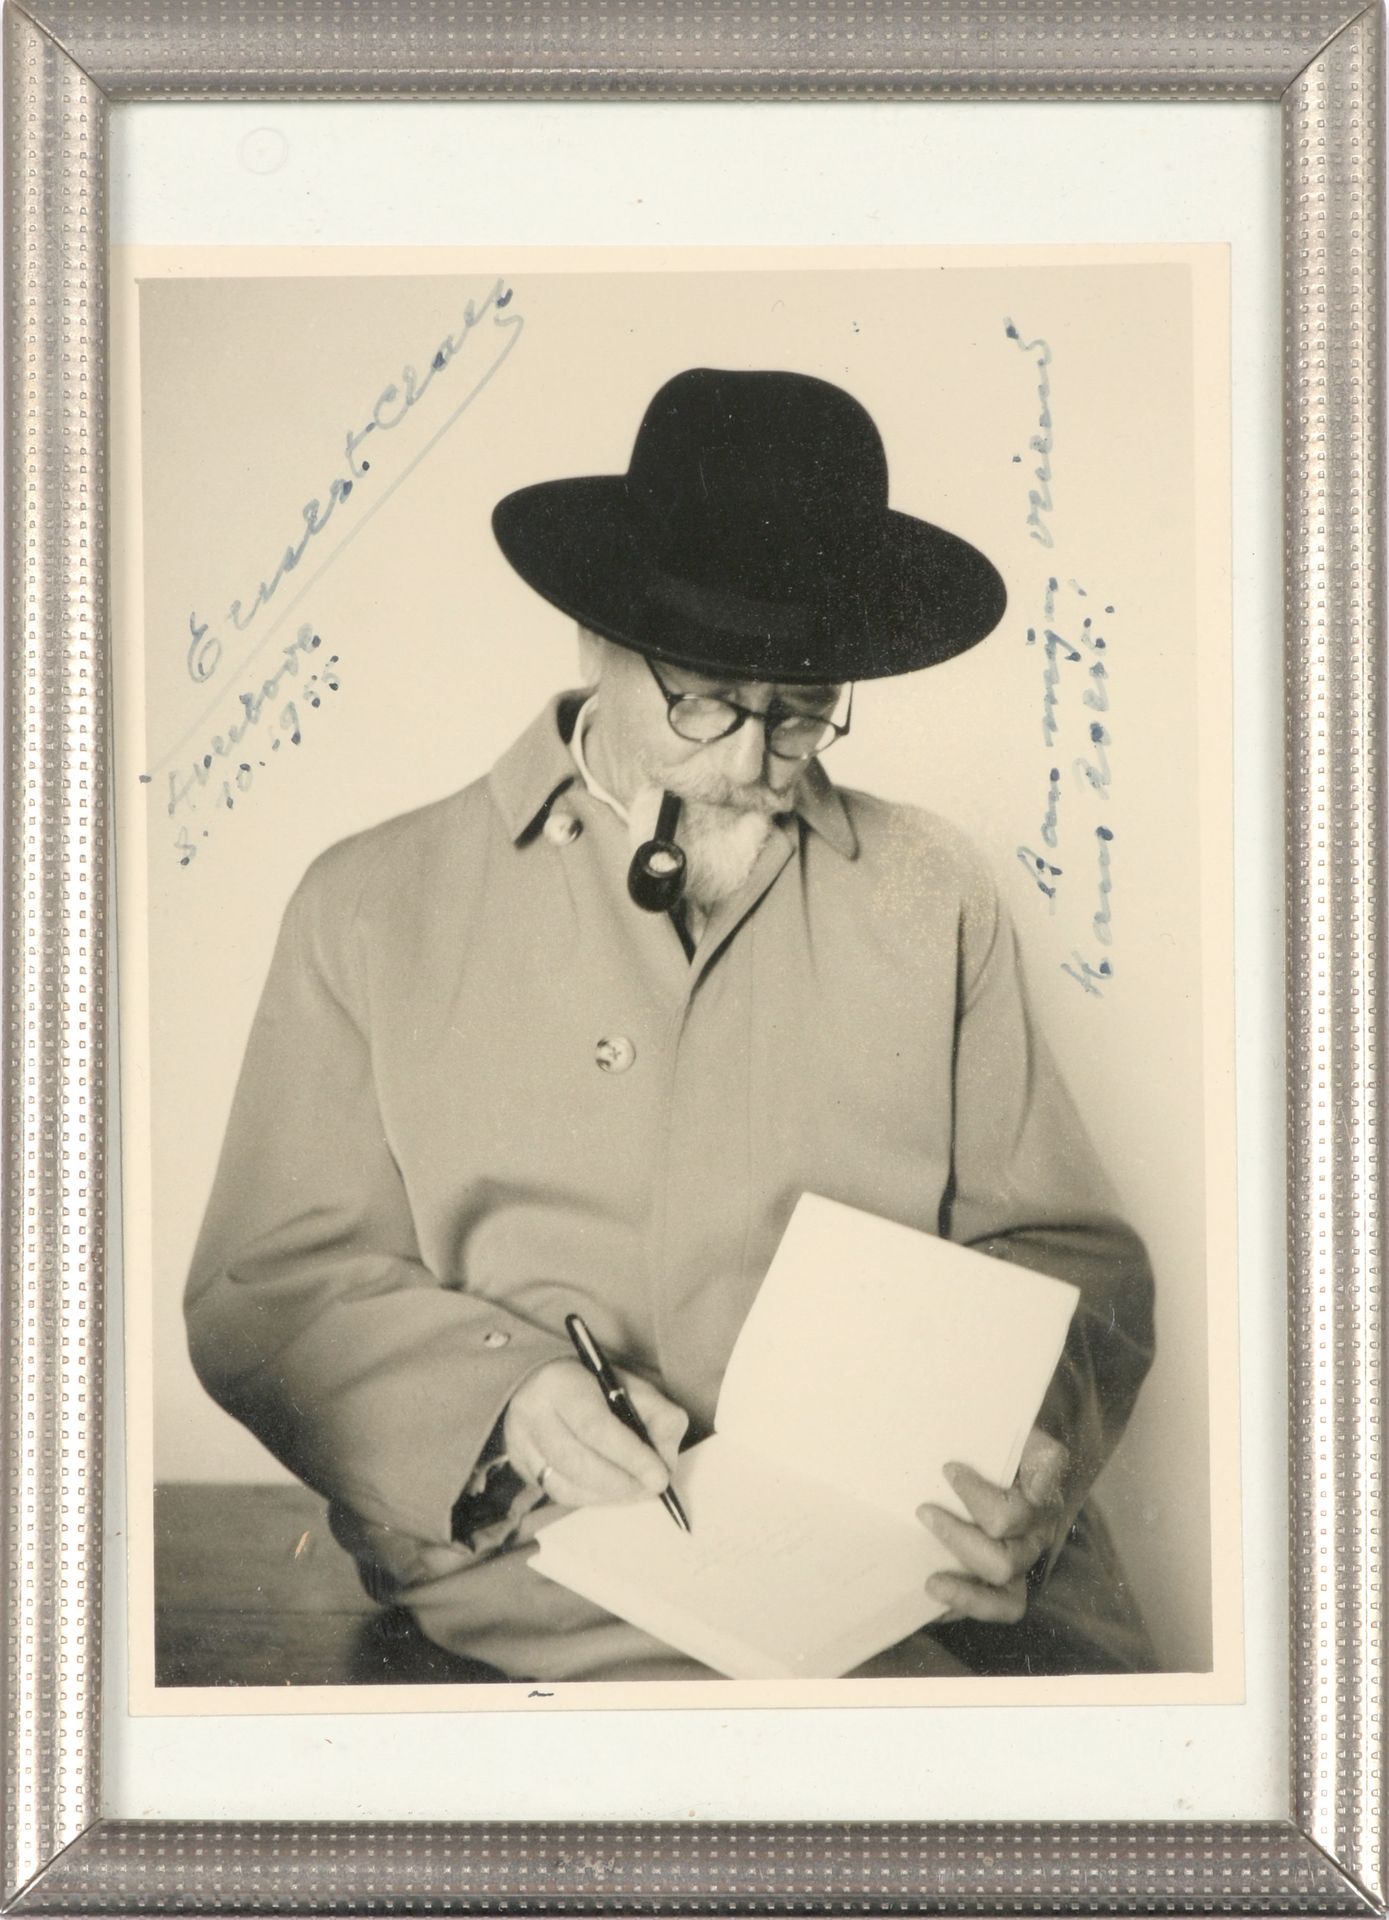 CLAES, Ernest Portret met hoed en boek

Foto originale (11,5 x 8,5 cm), met gesc&hellip;